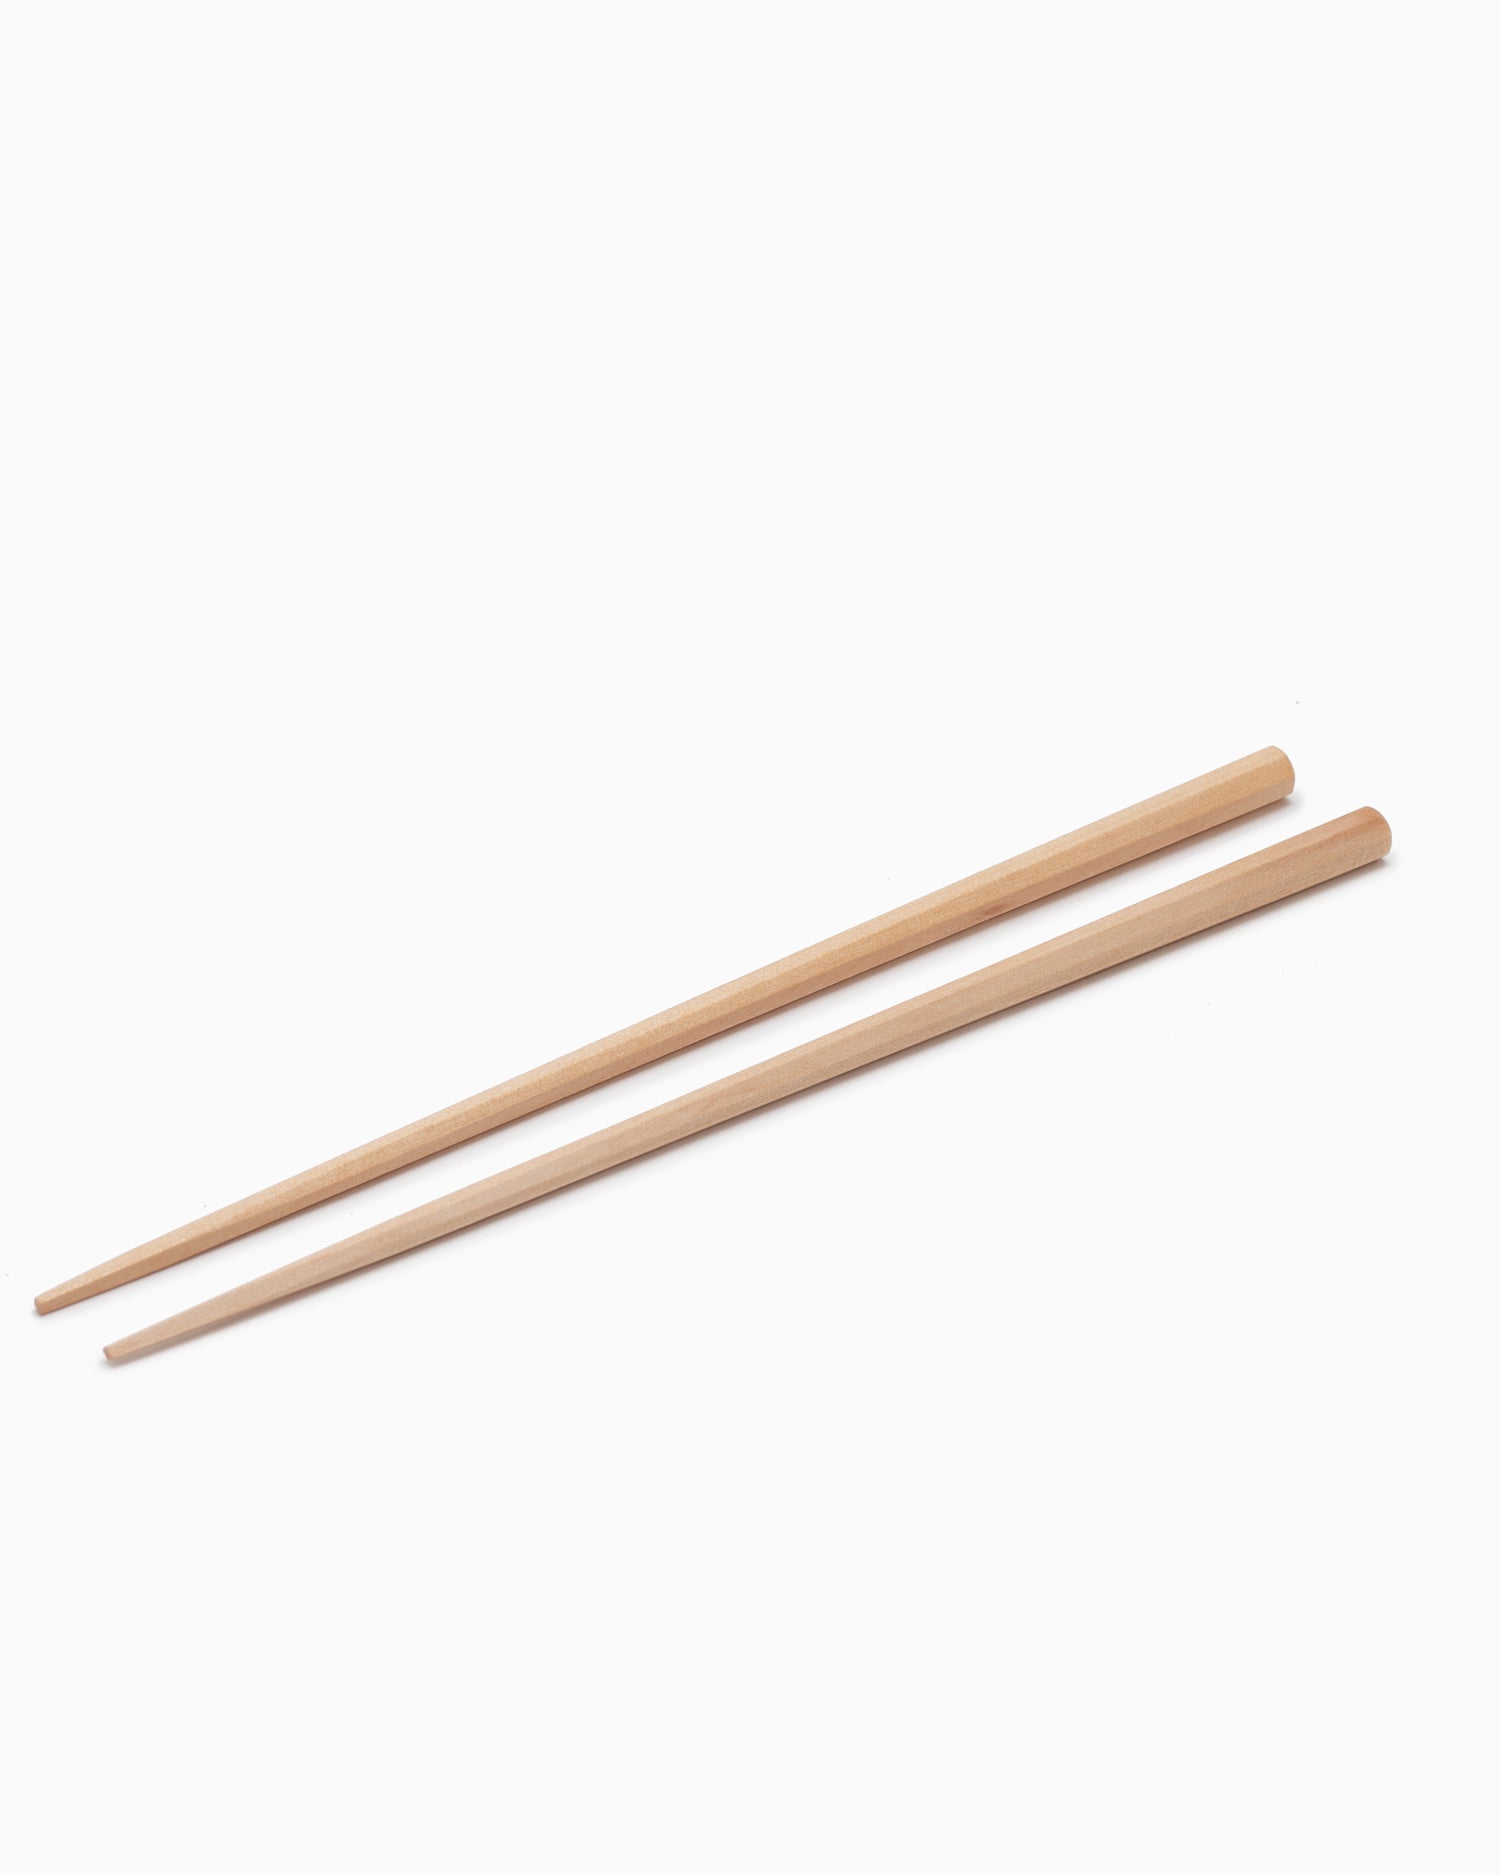 Wooden Chopsticks - Chestnut